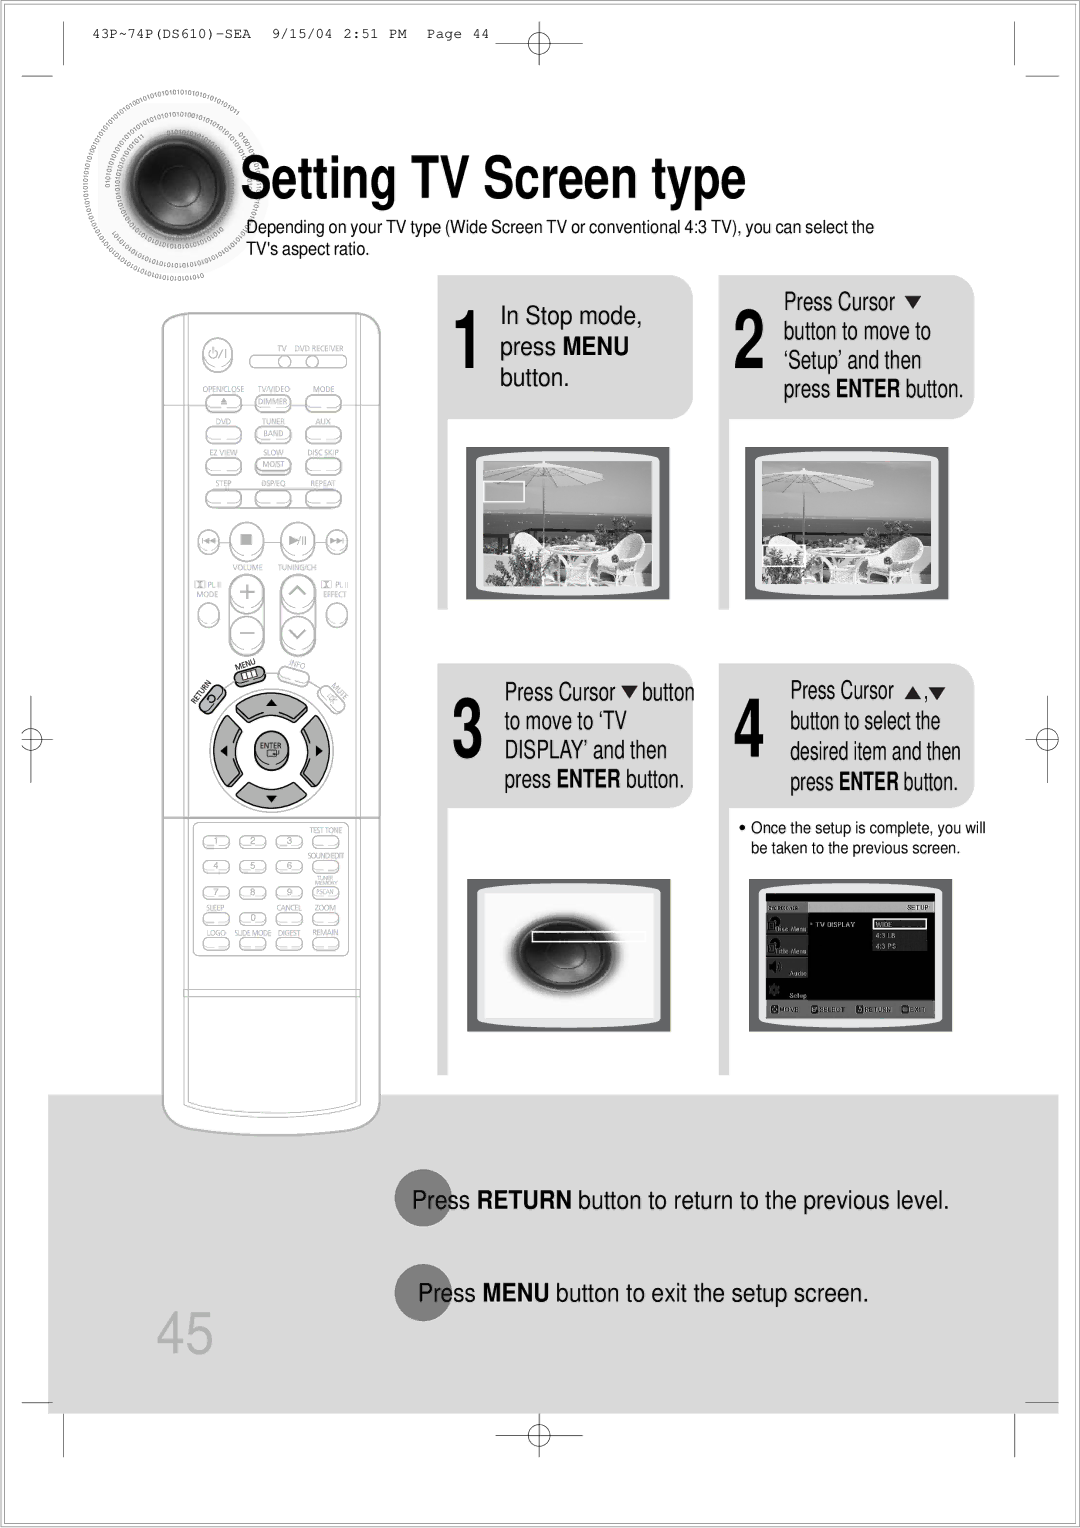 Samsung HT-DS610 instruction manual Setting TV Screen type, Press Cursor button 